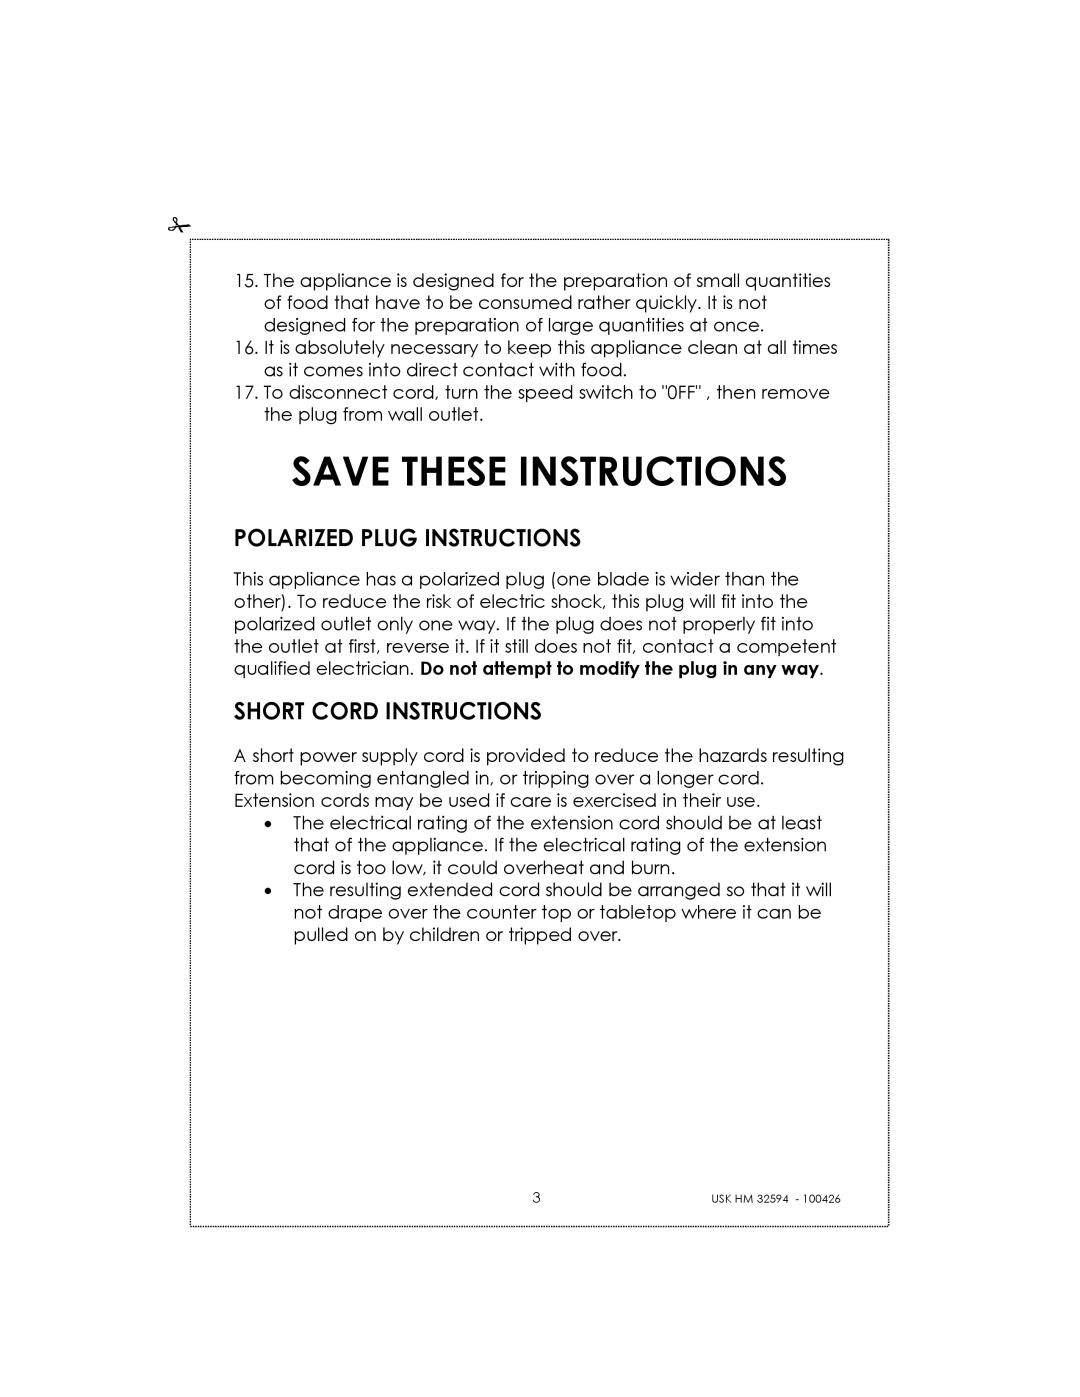 Kalorik USK HM 32594 manual Save These Instructions, Polarized Plug Instructions, Short Cord Instructions 